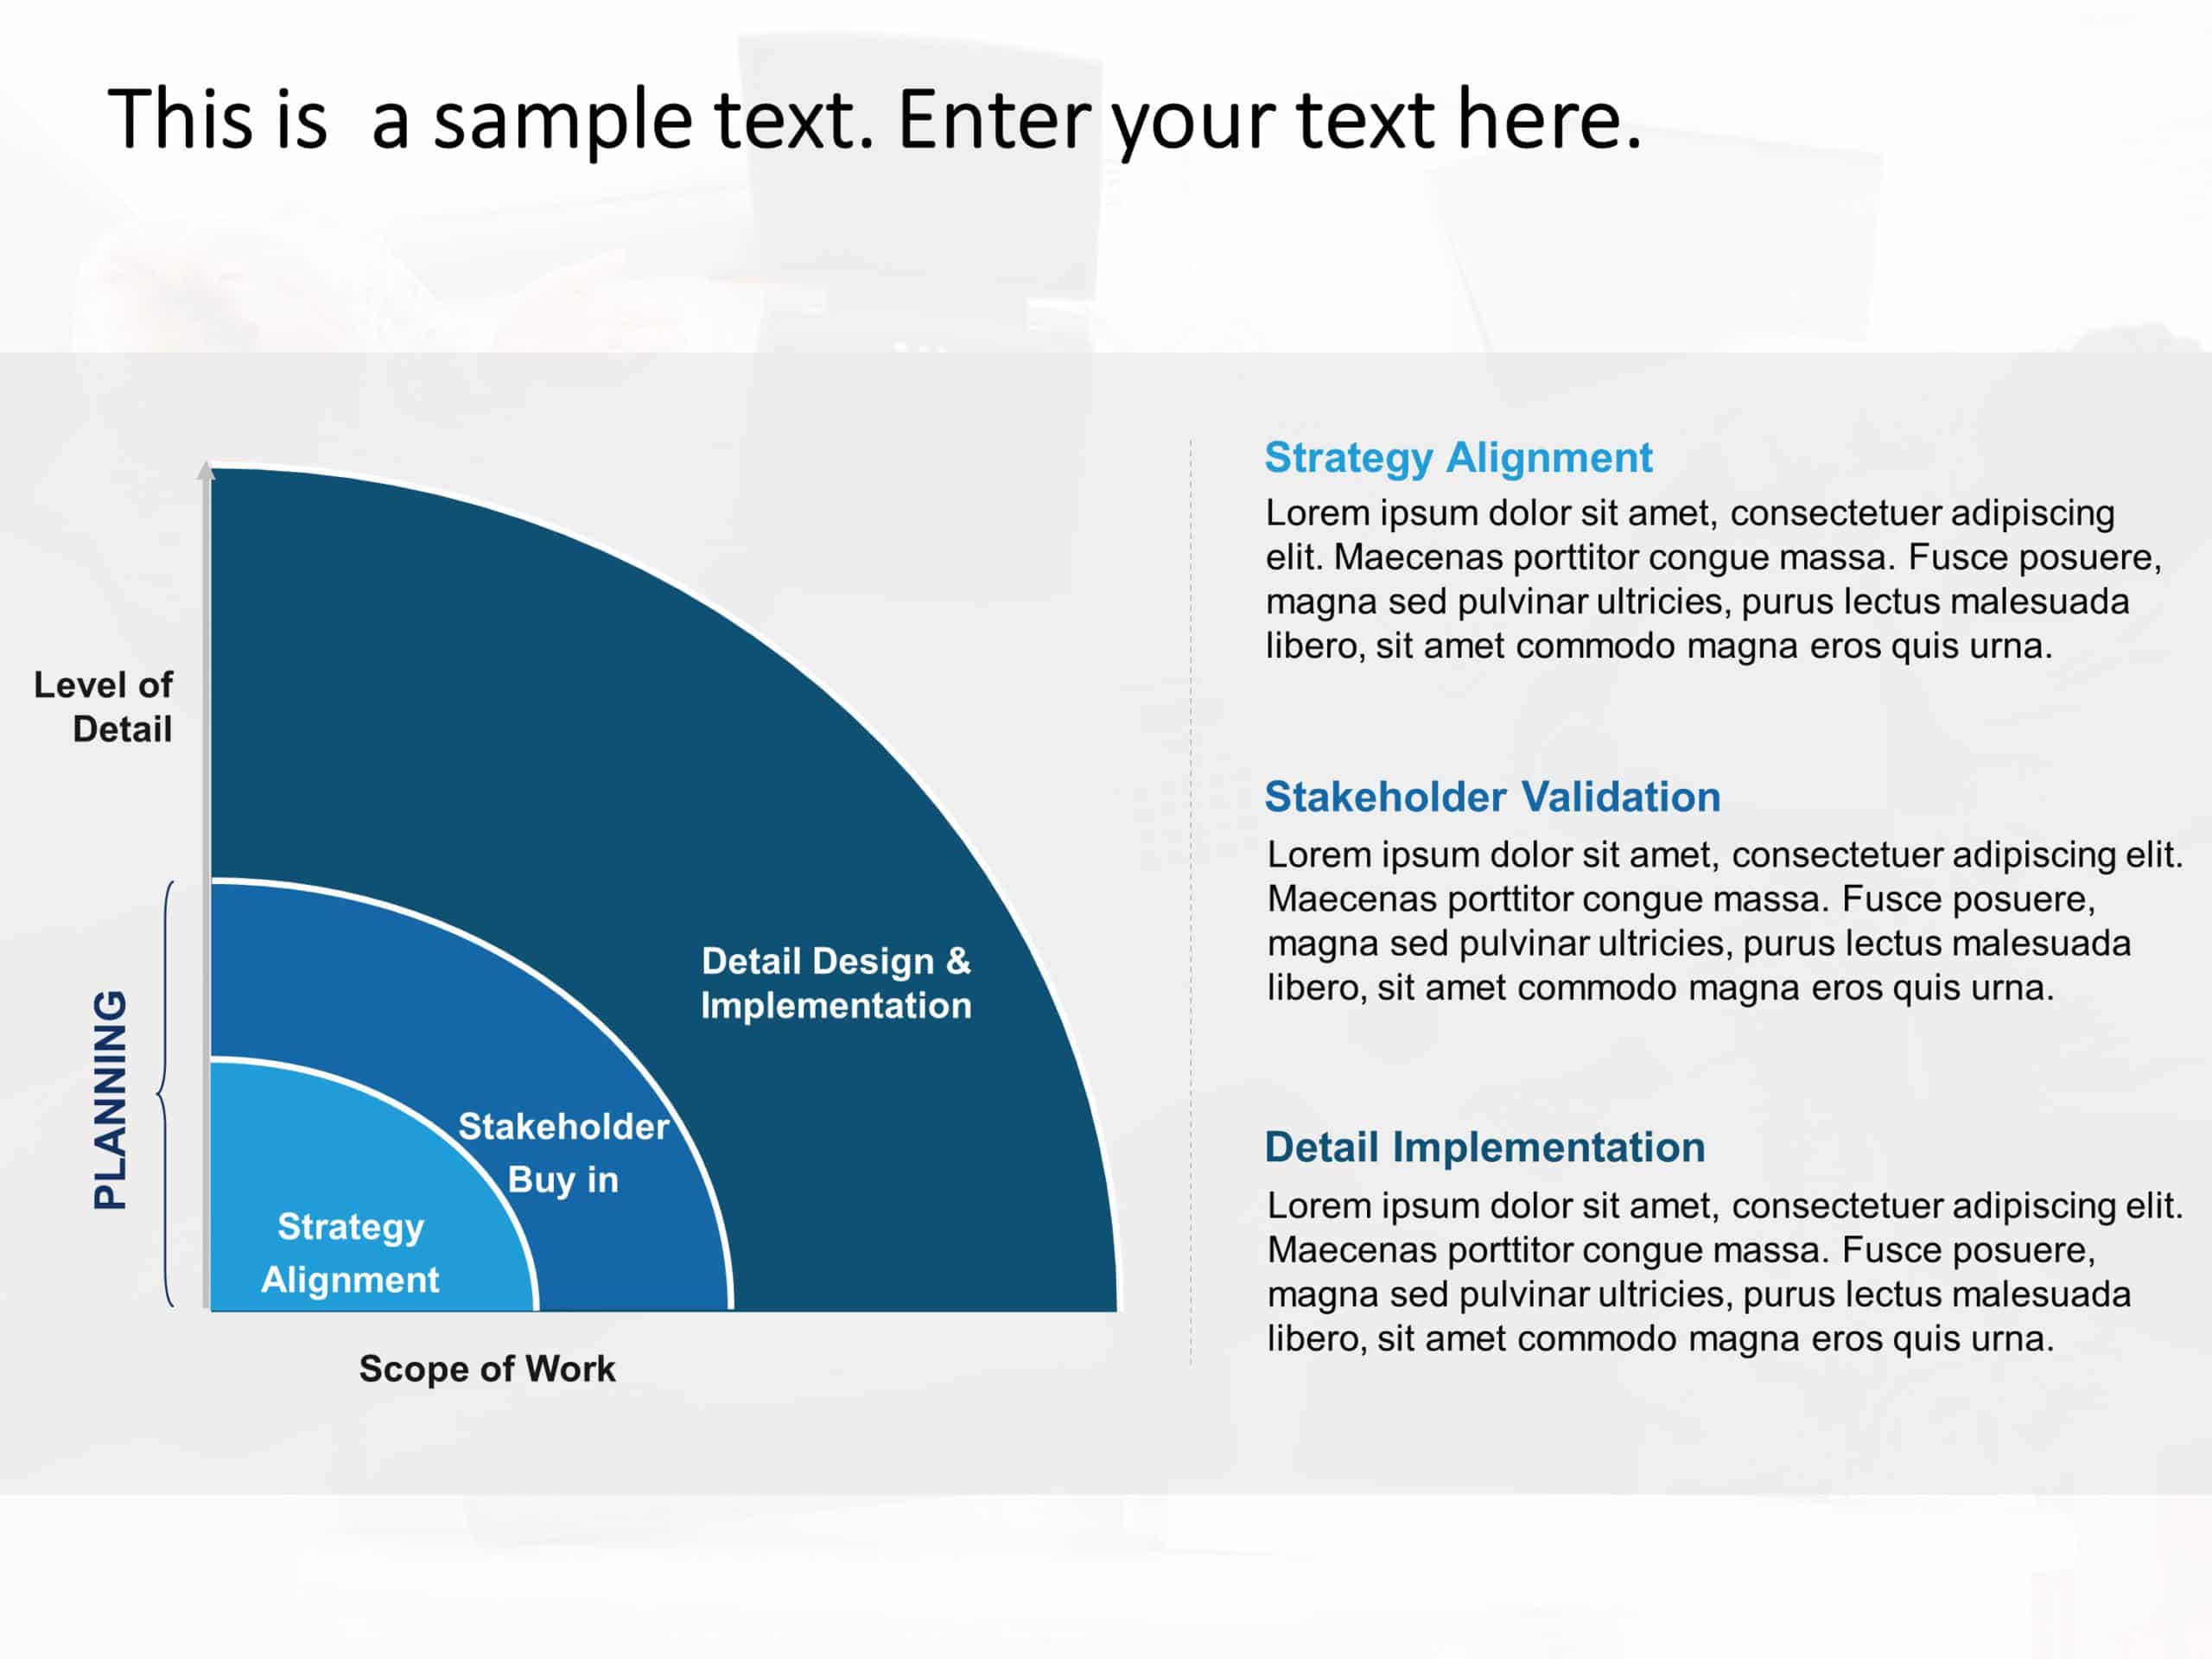 Strategic Initiatives Implementation PowerPoint Template & Google Slides Theme